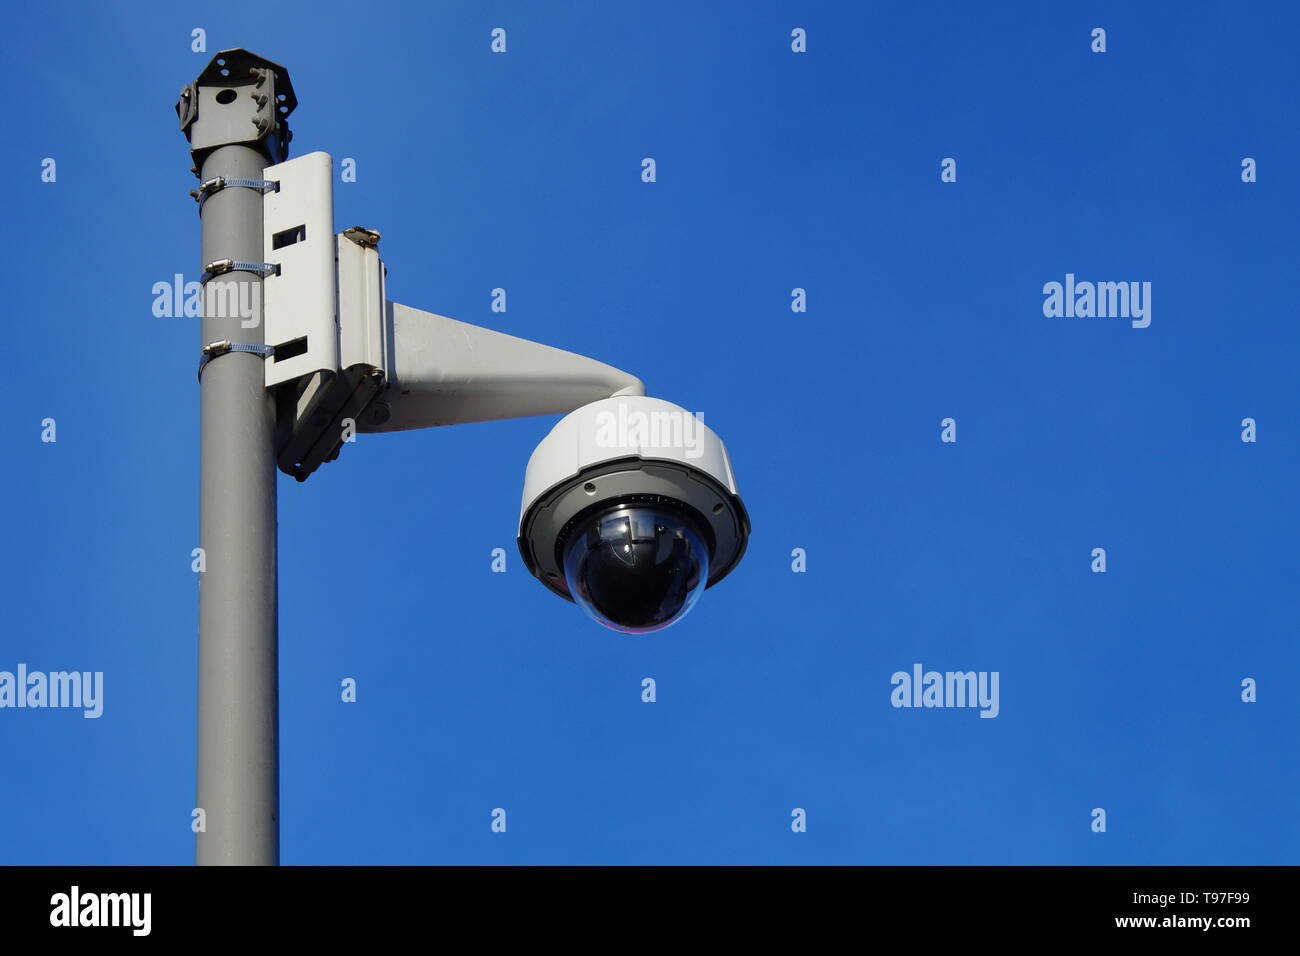 Security Camera Surveillance - CCTV Stock Photo - Alamy